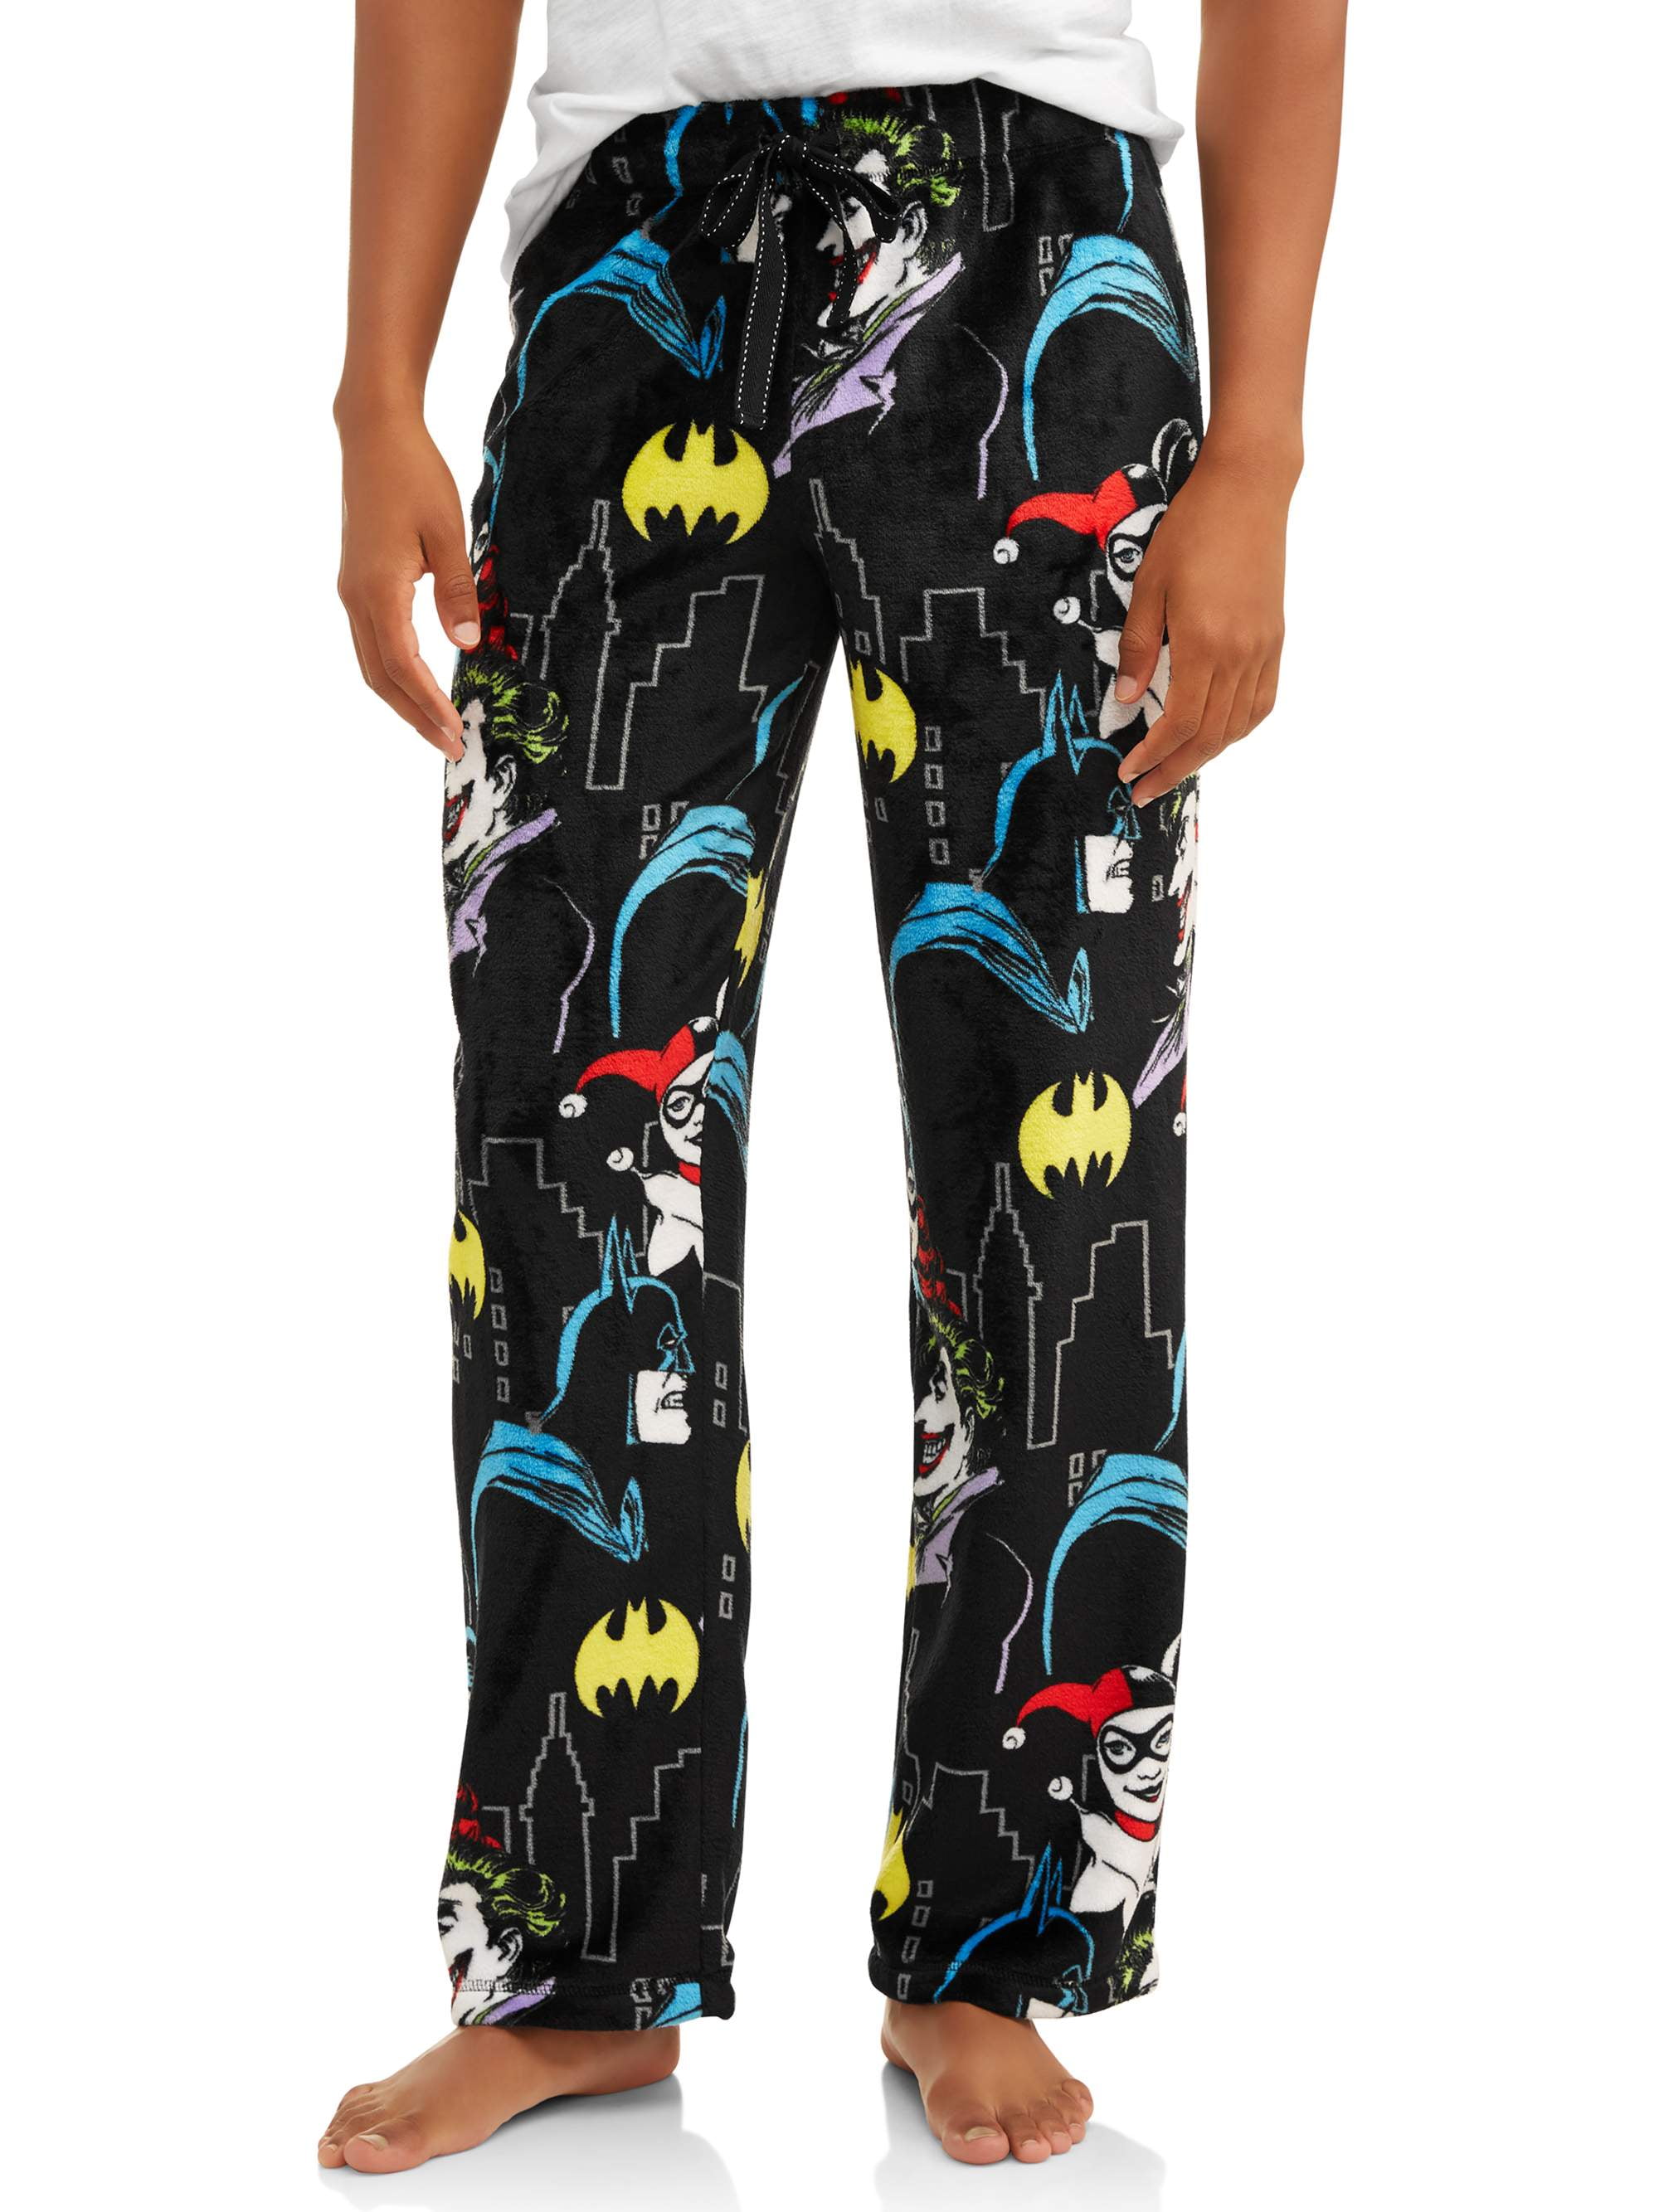 Women's and Women's plus batman pants - Walmart.com